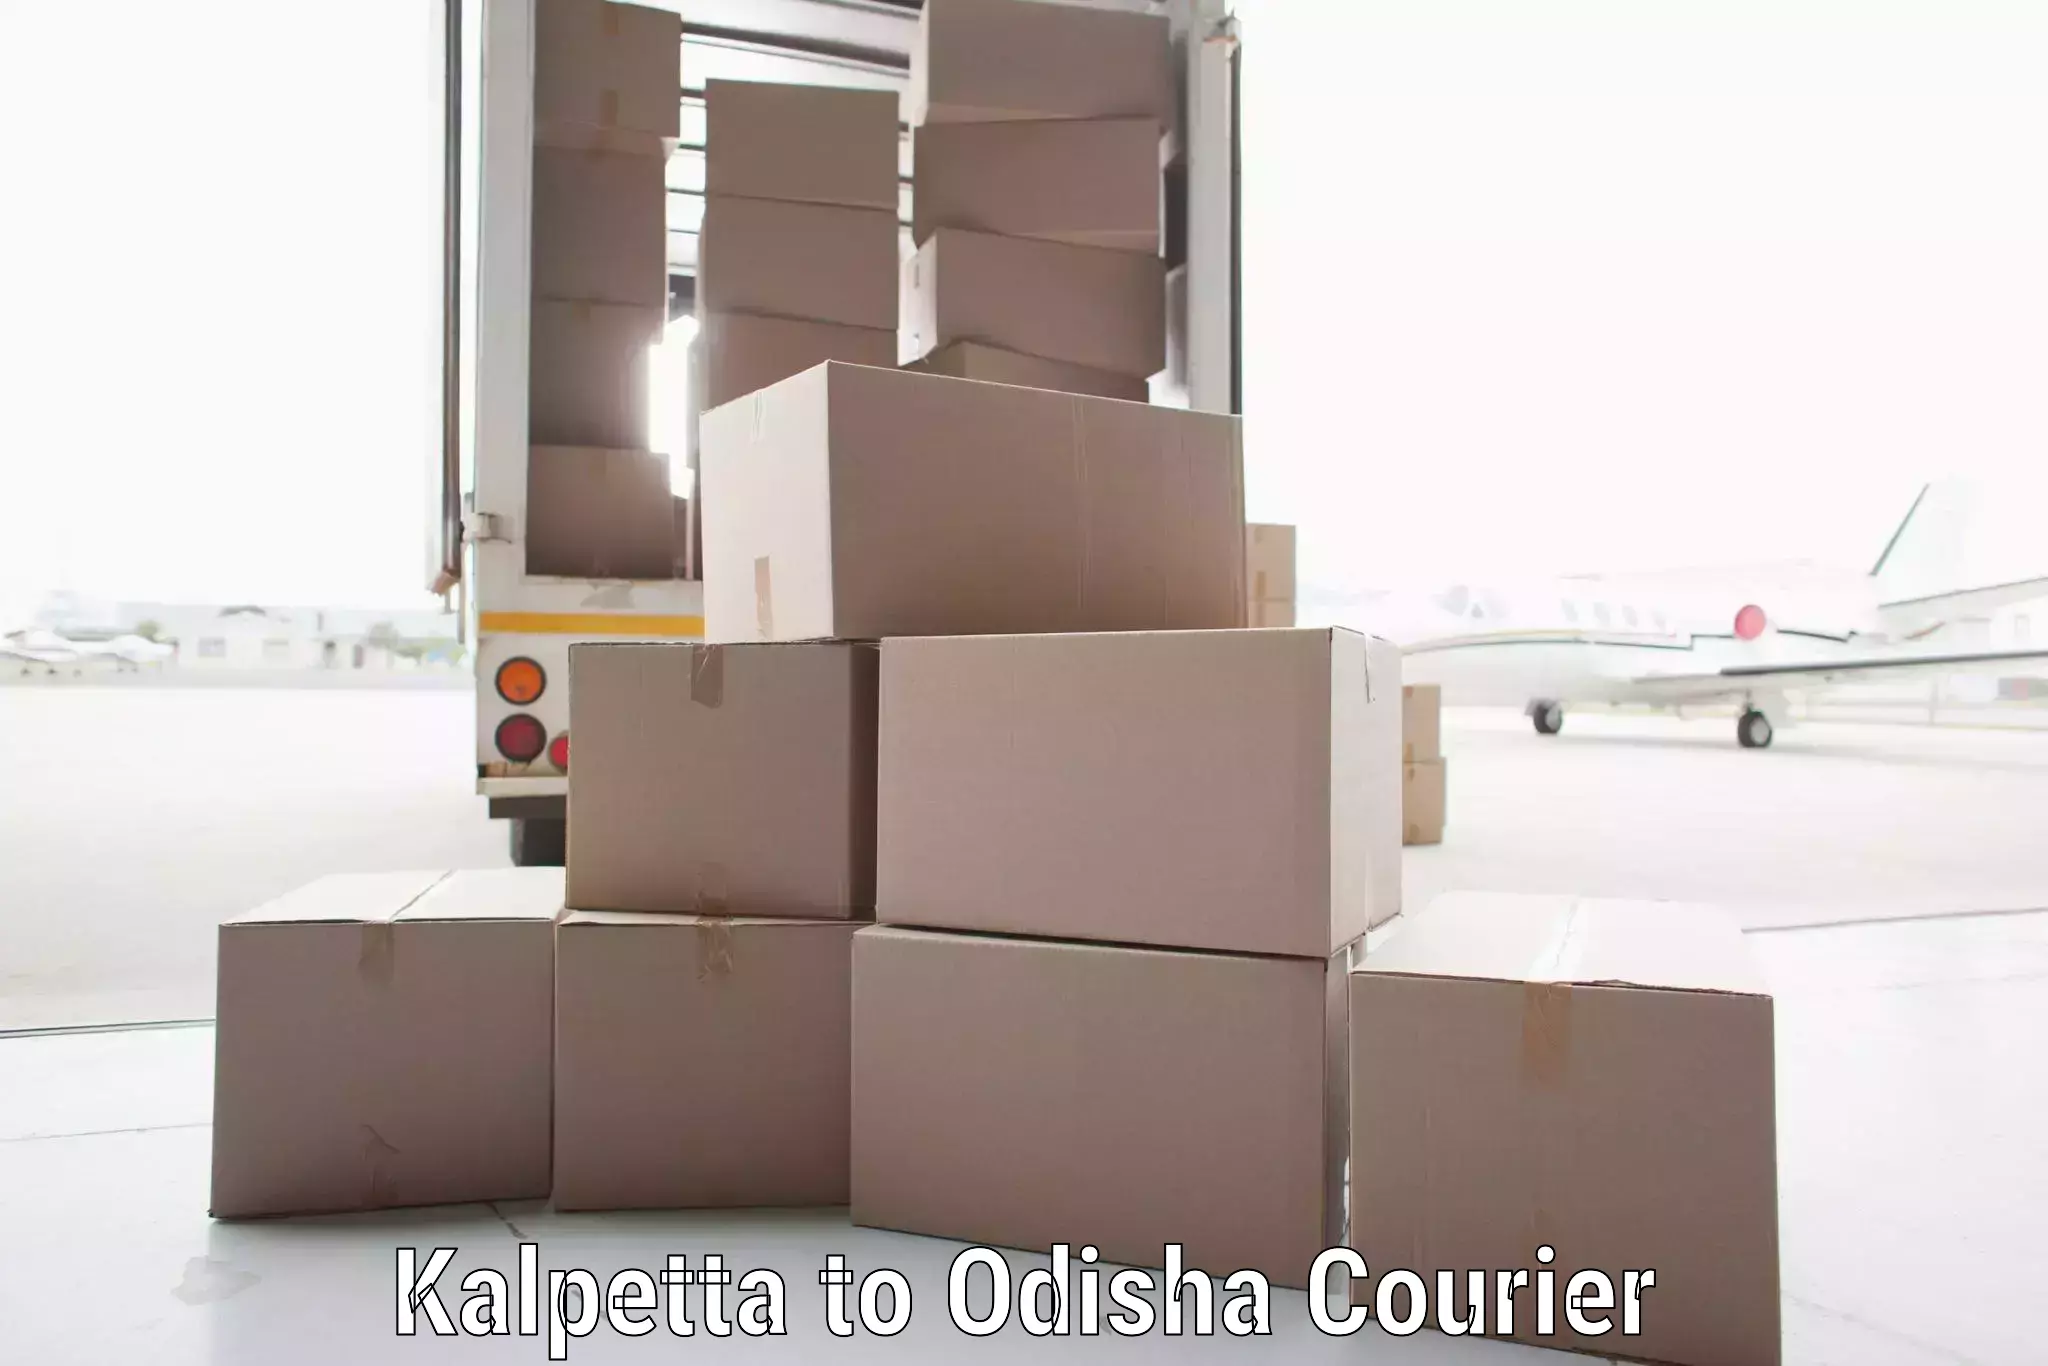 Seamless shipping experience Kalpetta to Kalimela